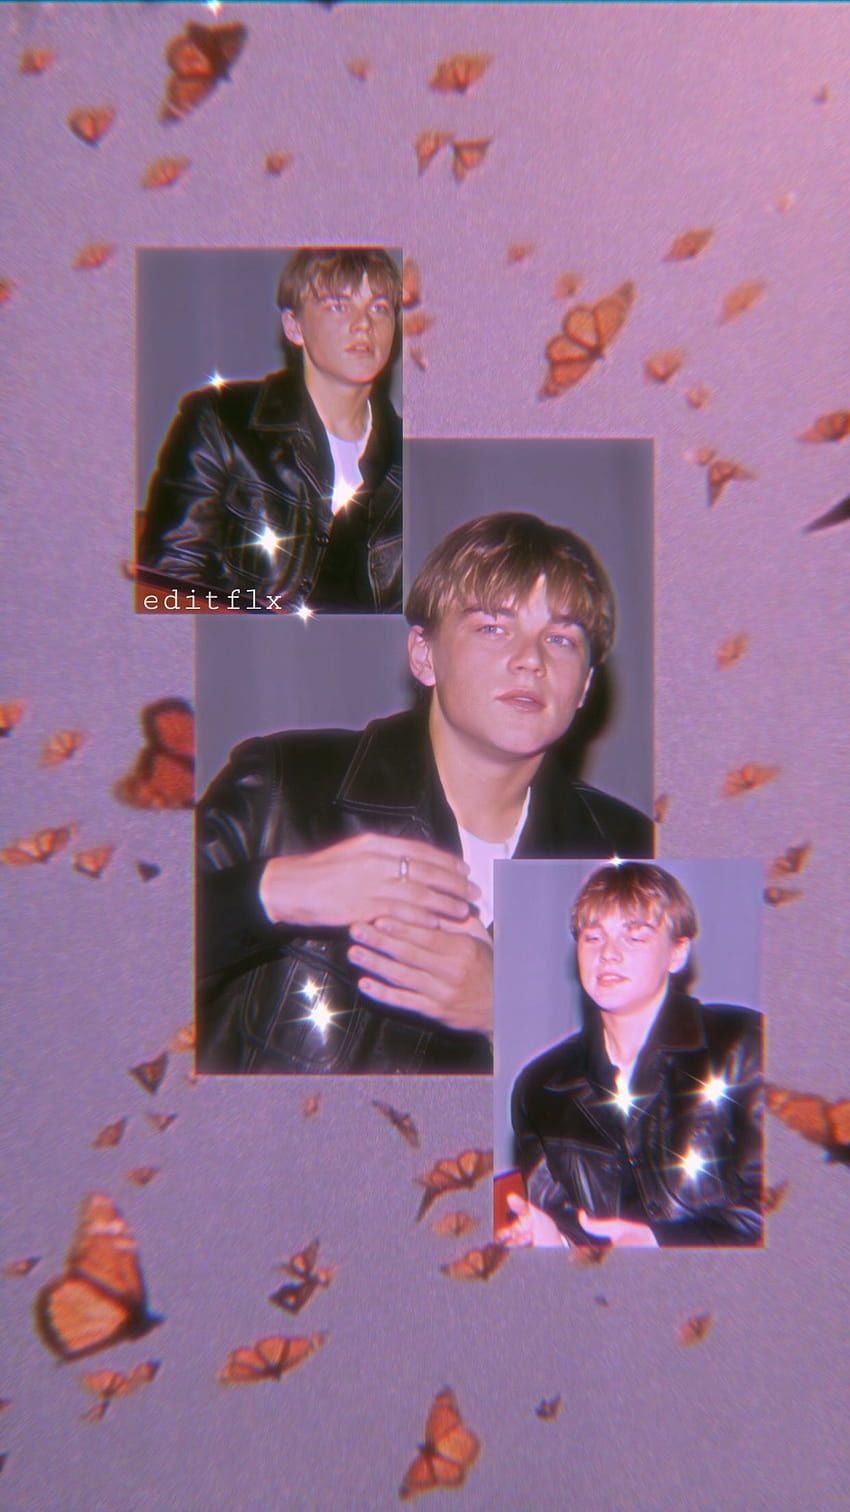 A picture of the same person in different poses - Leonardo DiCaprio